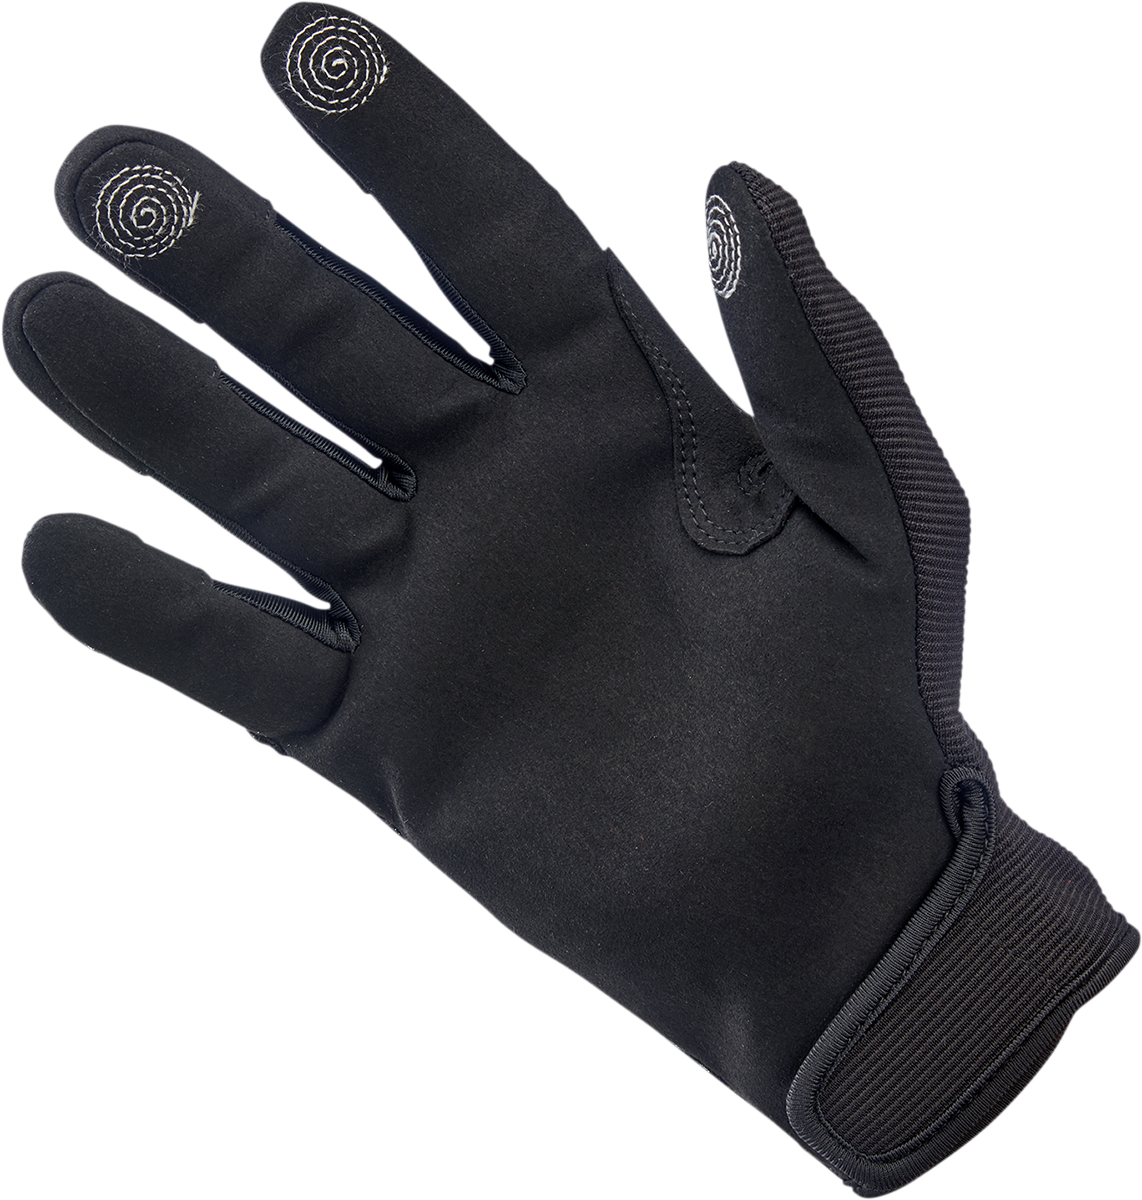 BILTWELL Anza Gloves - Black Out - XS 1507-0101-001